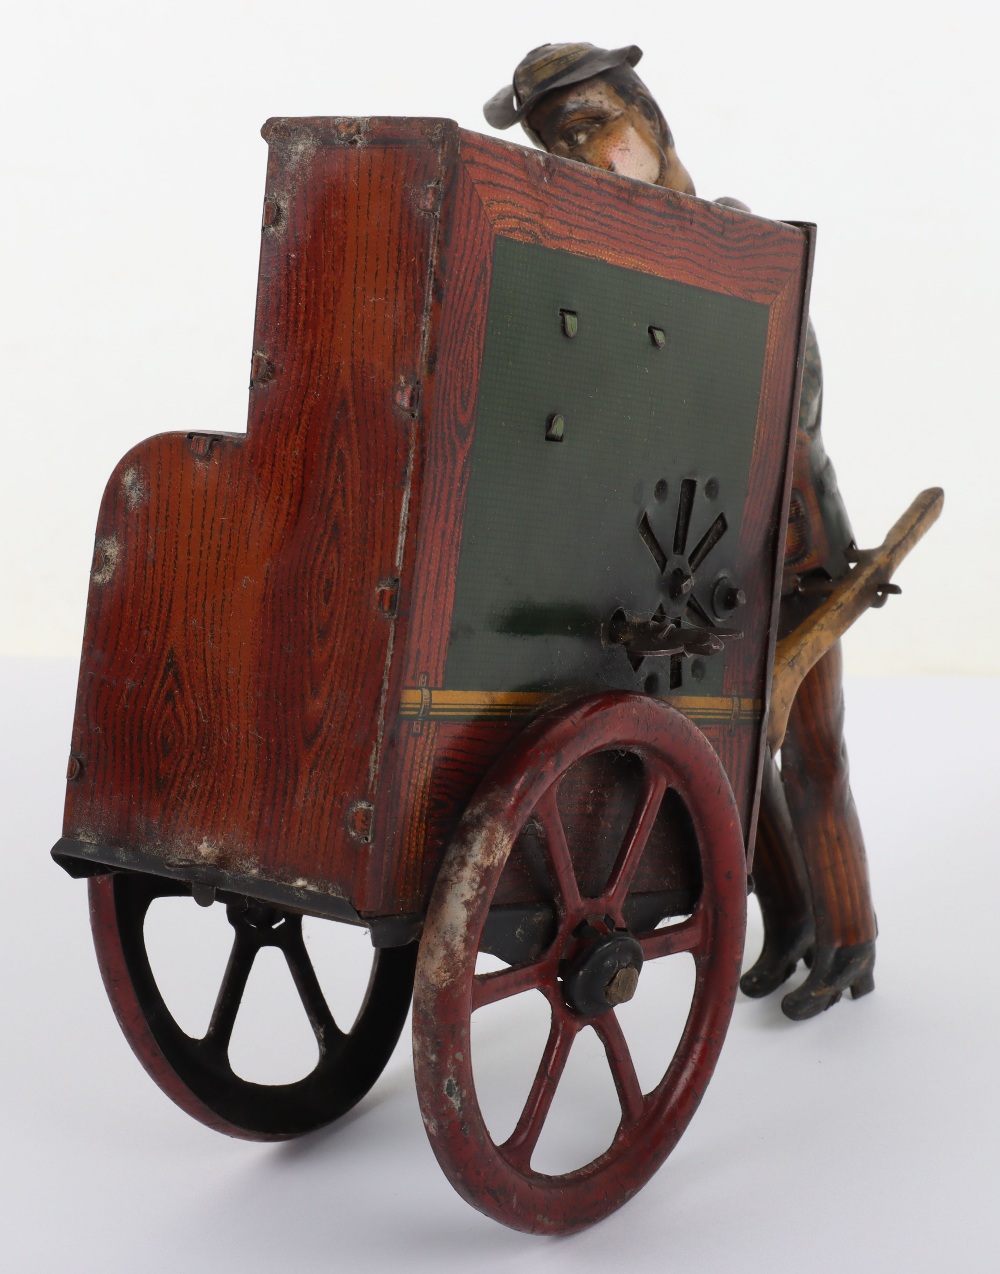 Distler Jacko the Merry Organ Grinder tinplate toy - Image 5 of 5